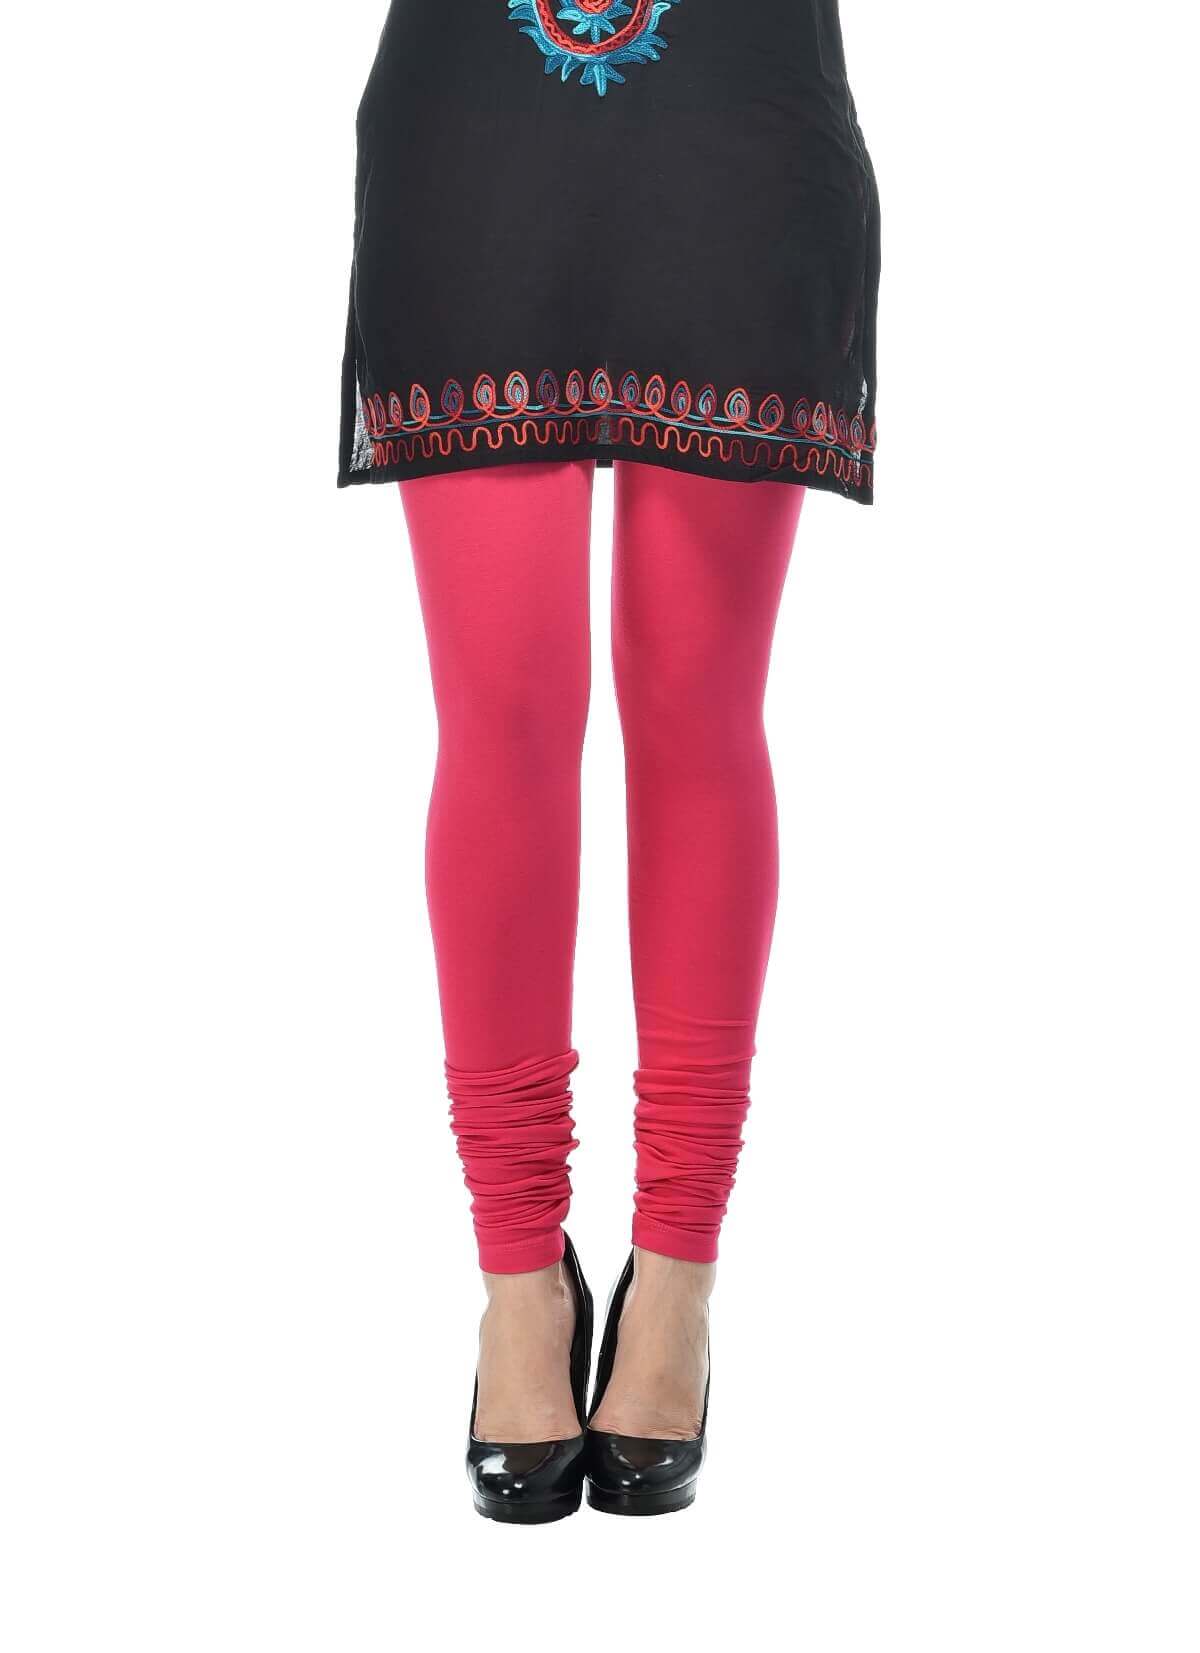 Red Premium Lyra stretchable Churidar leggings – Indi Ethnics